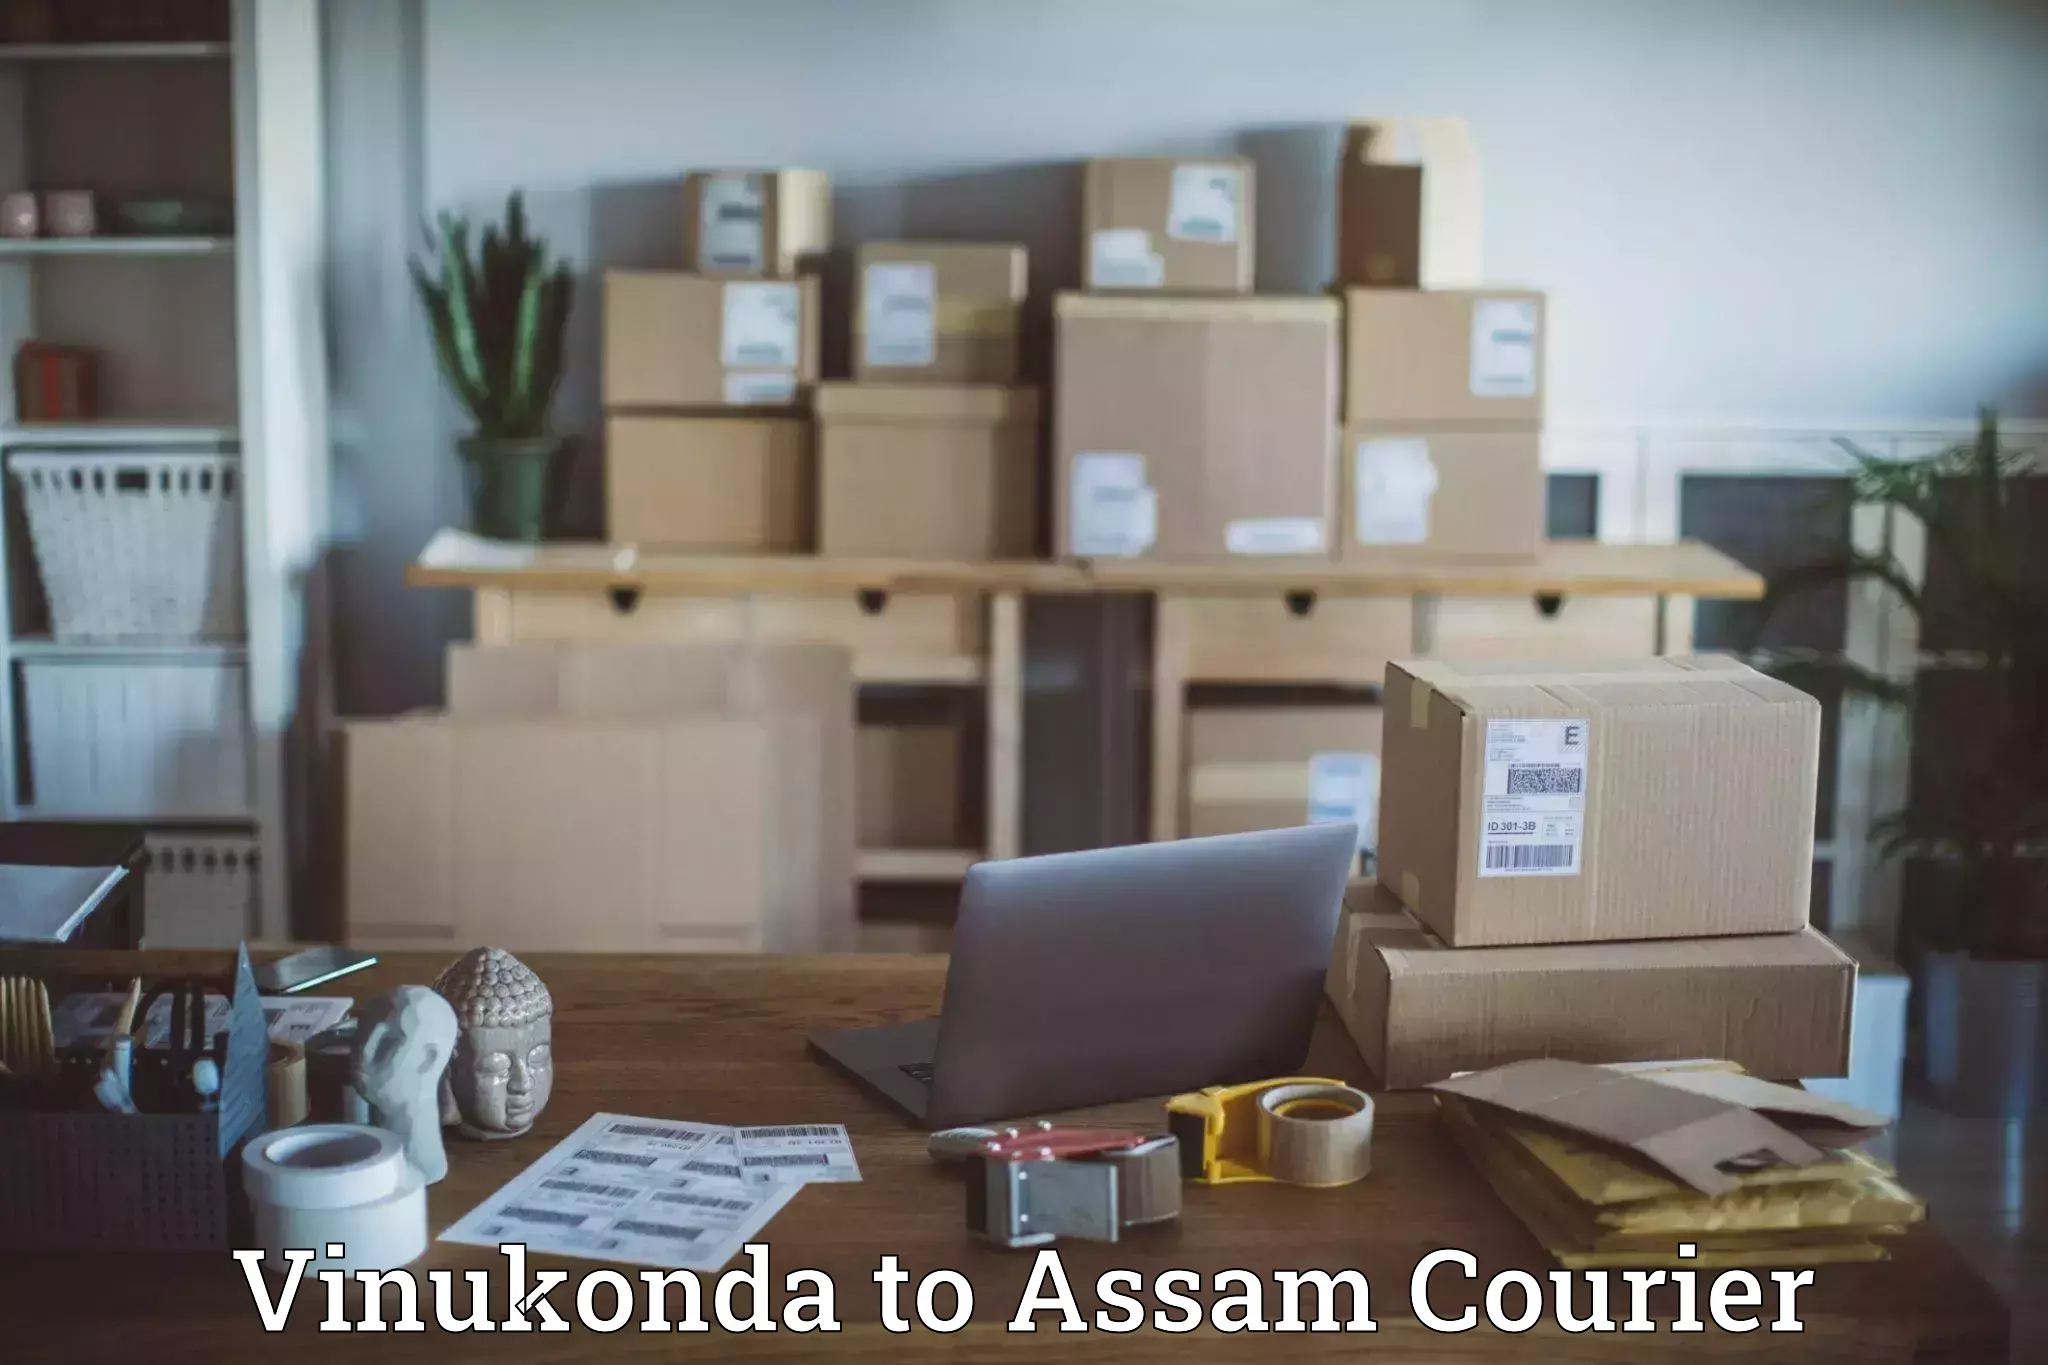 Digital courier platforms Vinukonda to Lala Assam